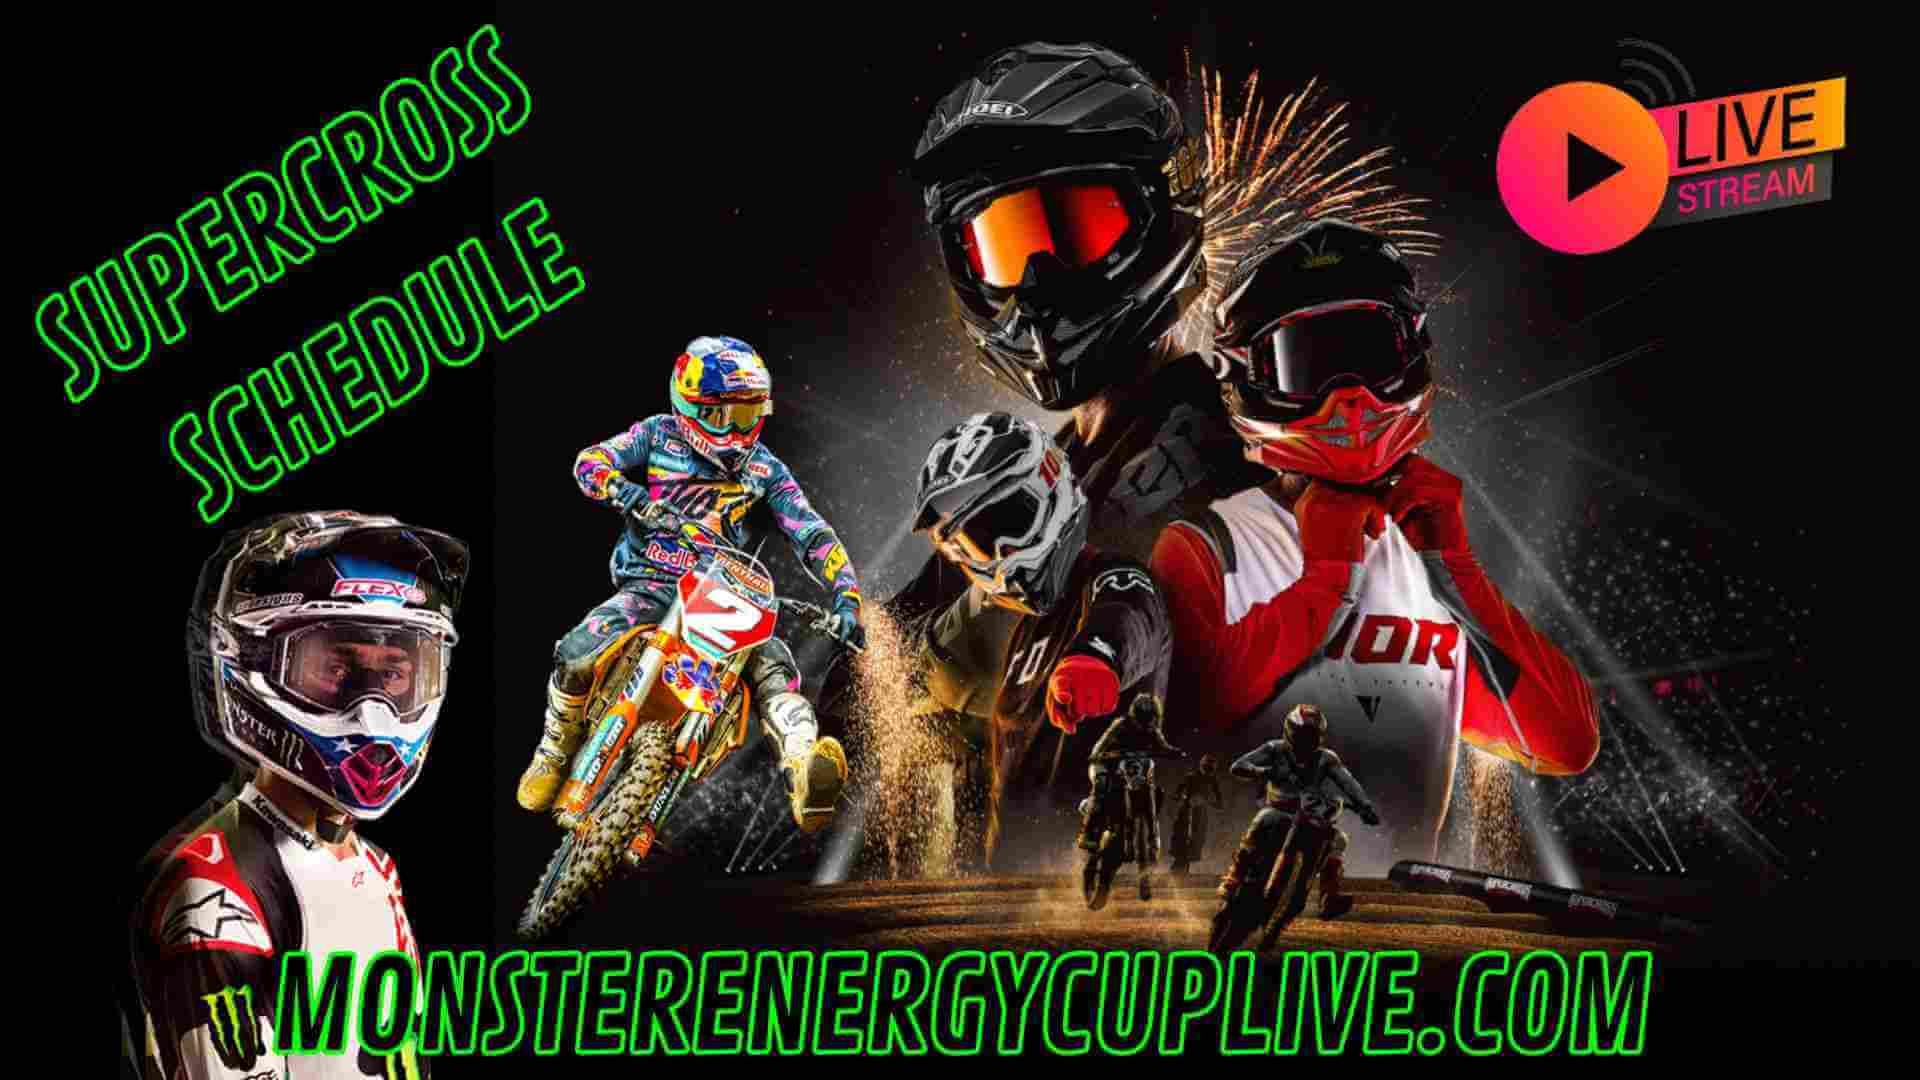 2017 Monster Energy AMA Supercross Schedule